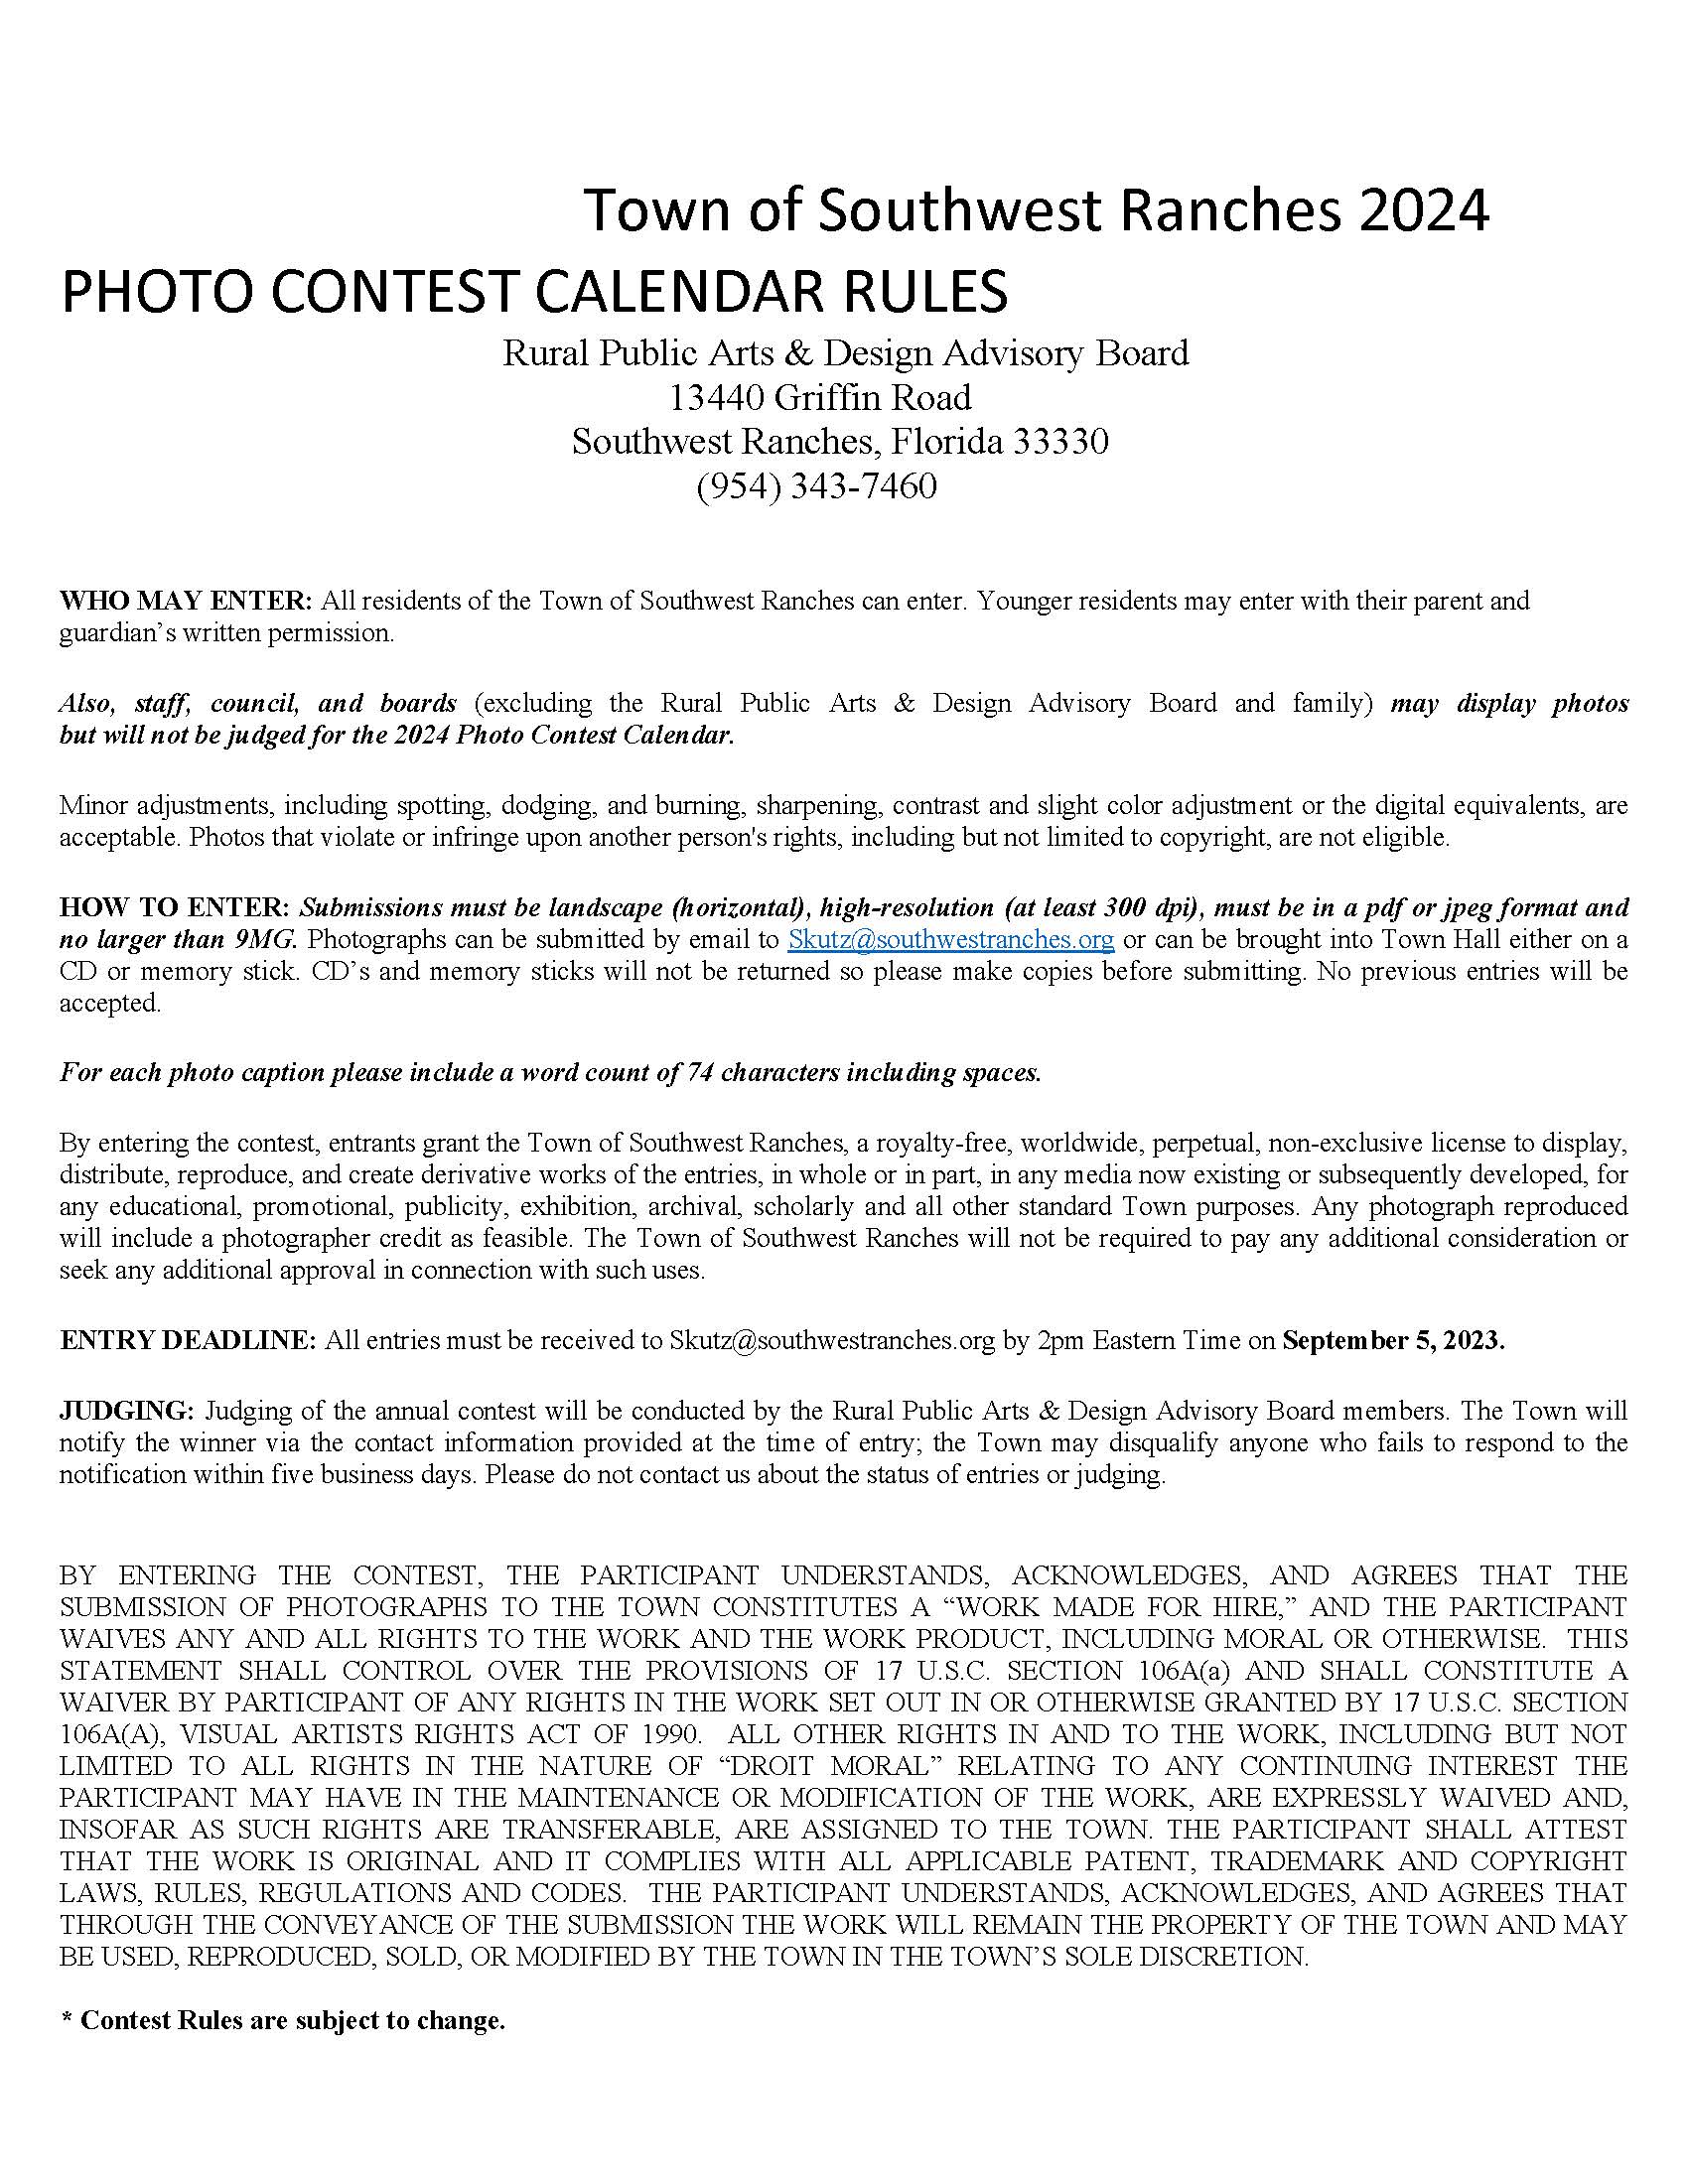 Photo Contest Calendar Rules 2024 1 